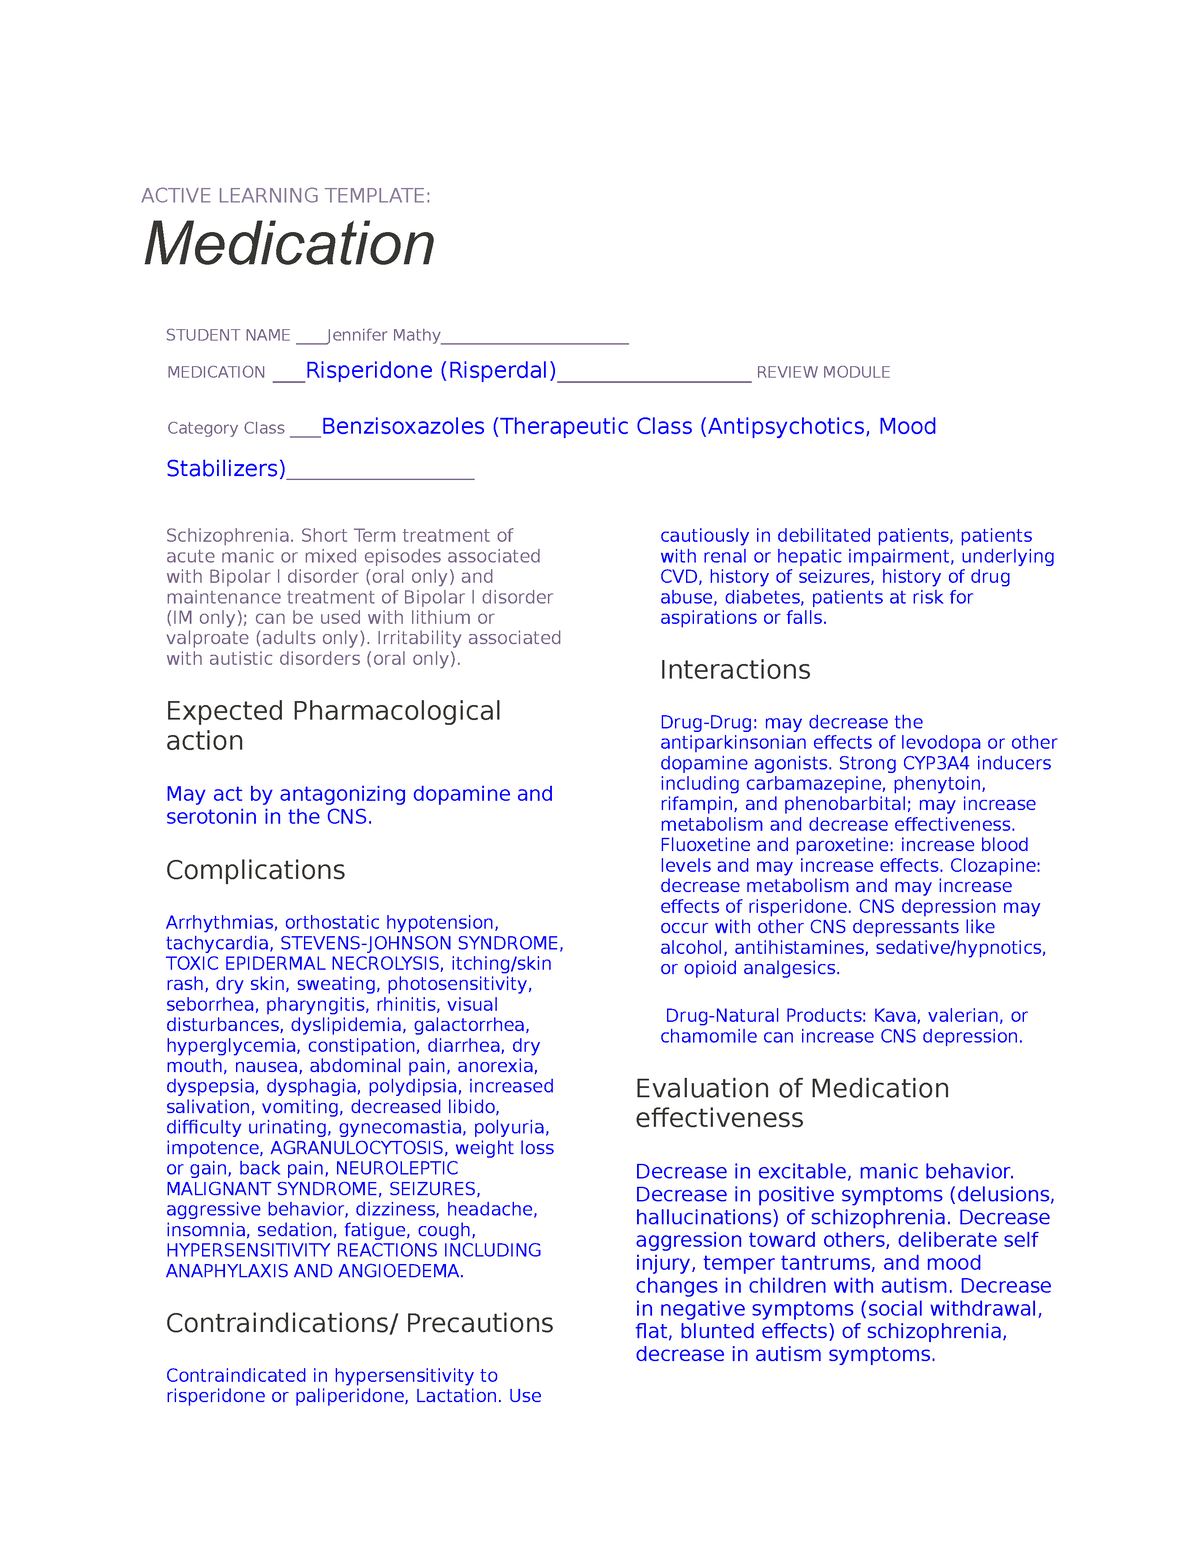 risperidone-risperdal-active-learning-template-medication-student-name-jennifer-studocu